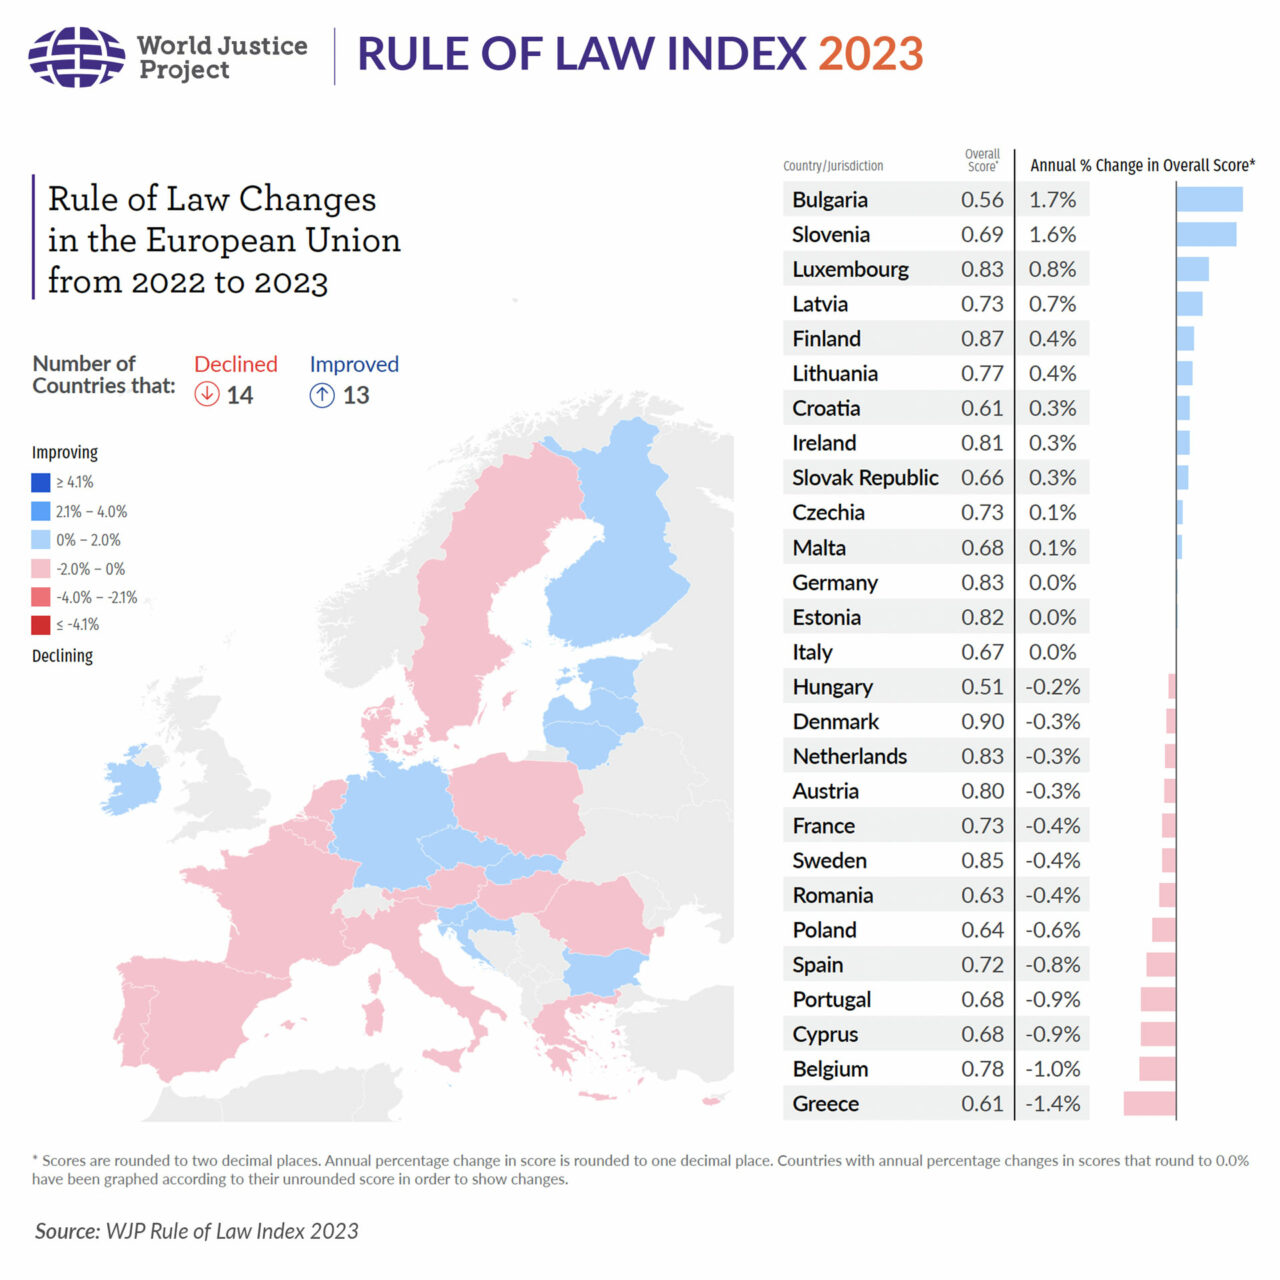 Rule of Law Changes in EU 2022-2023